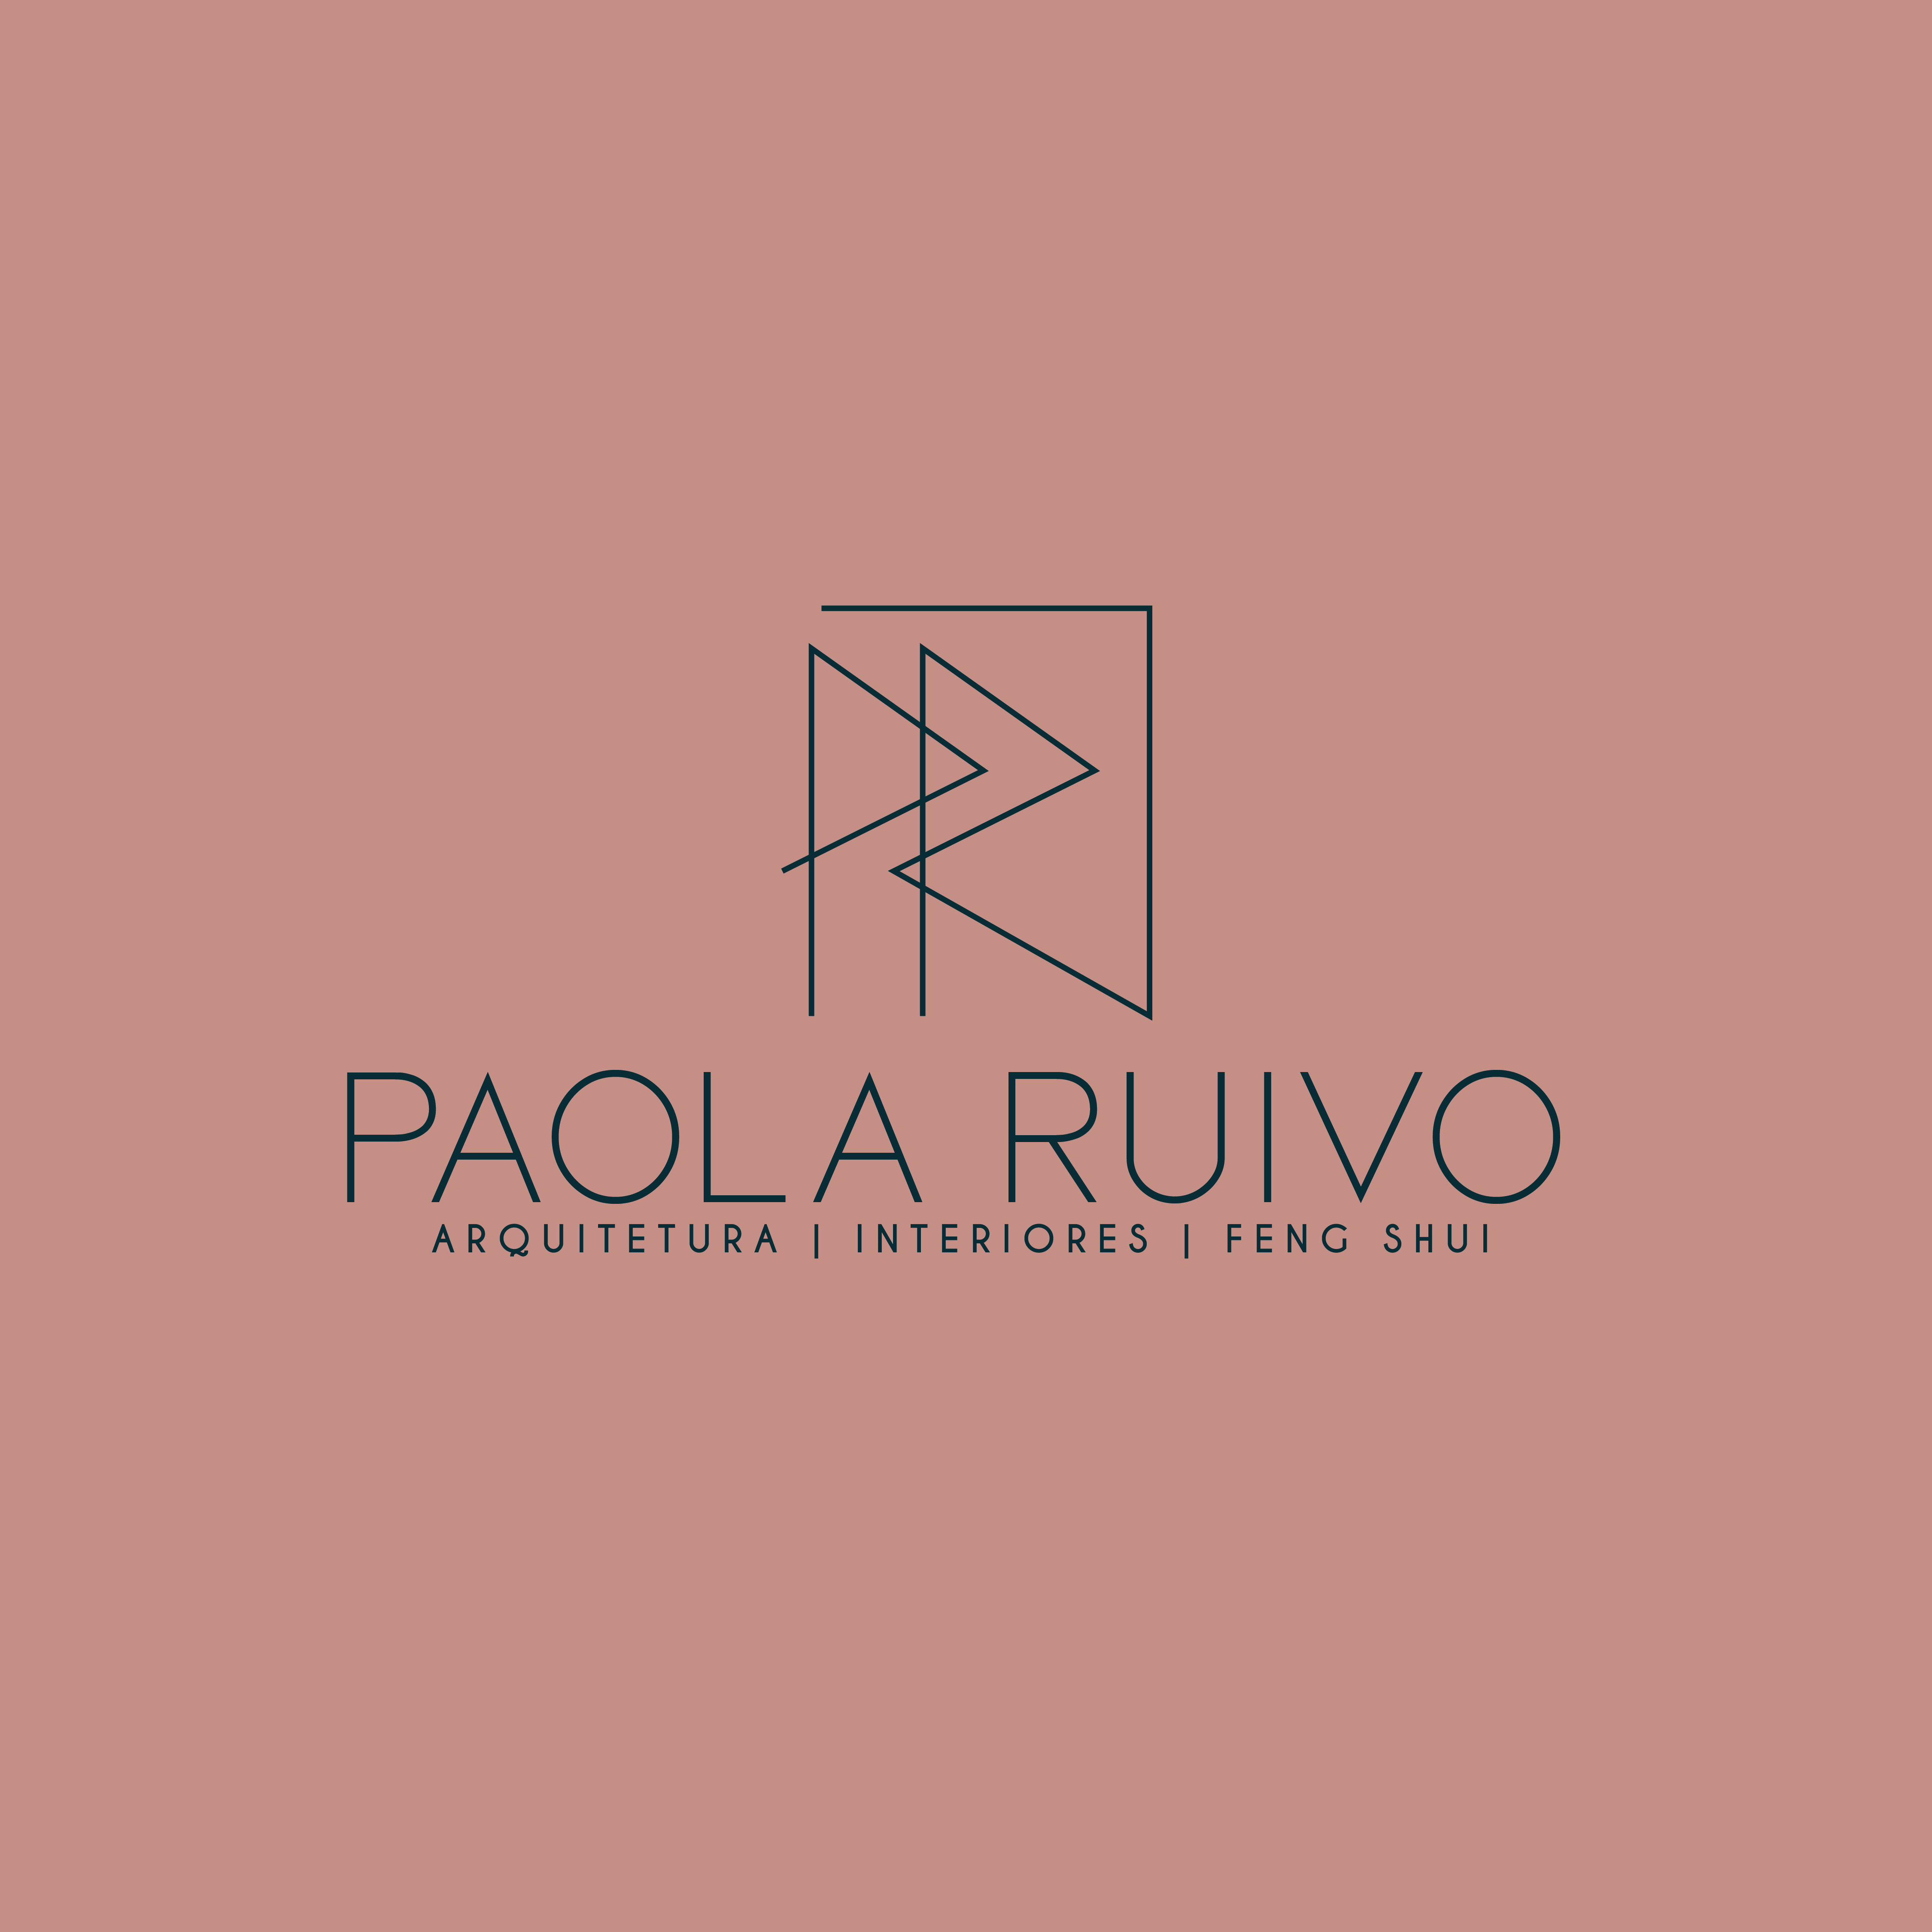 Paola Ruivo -  Arquitetura | Interiores | Feng Shui Logo